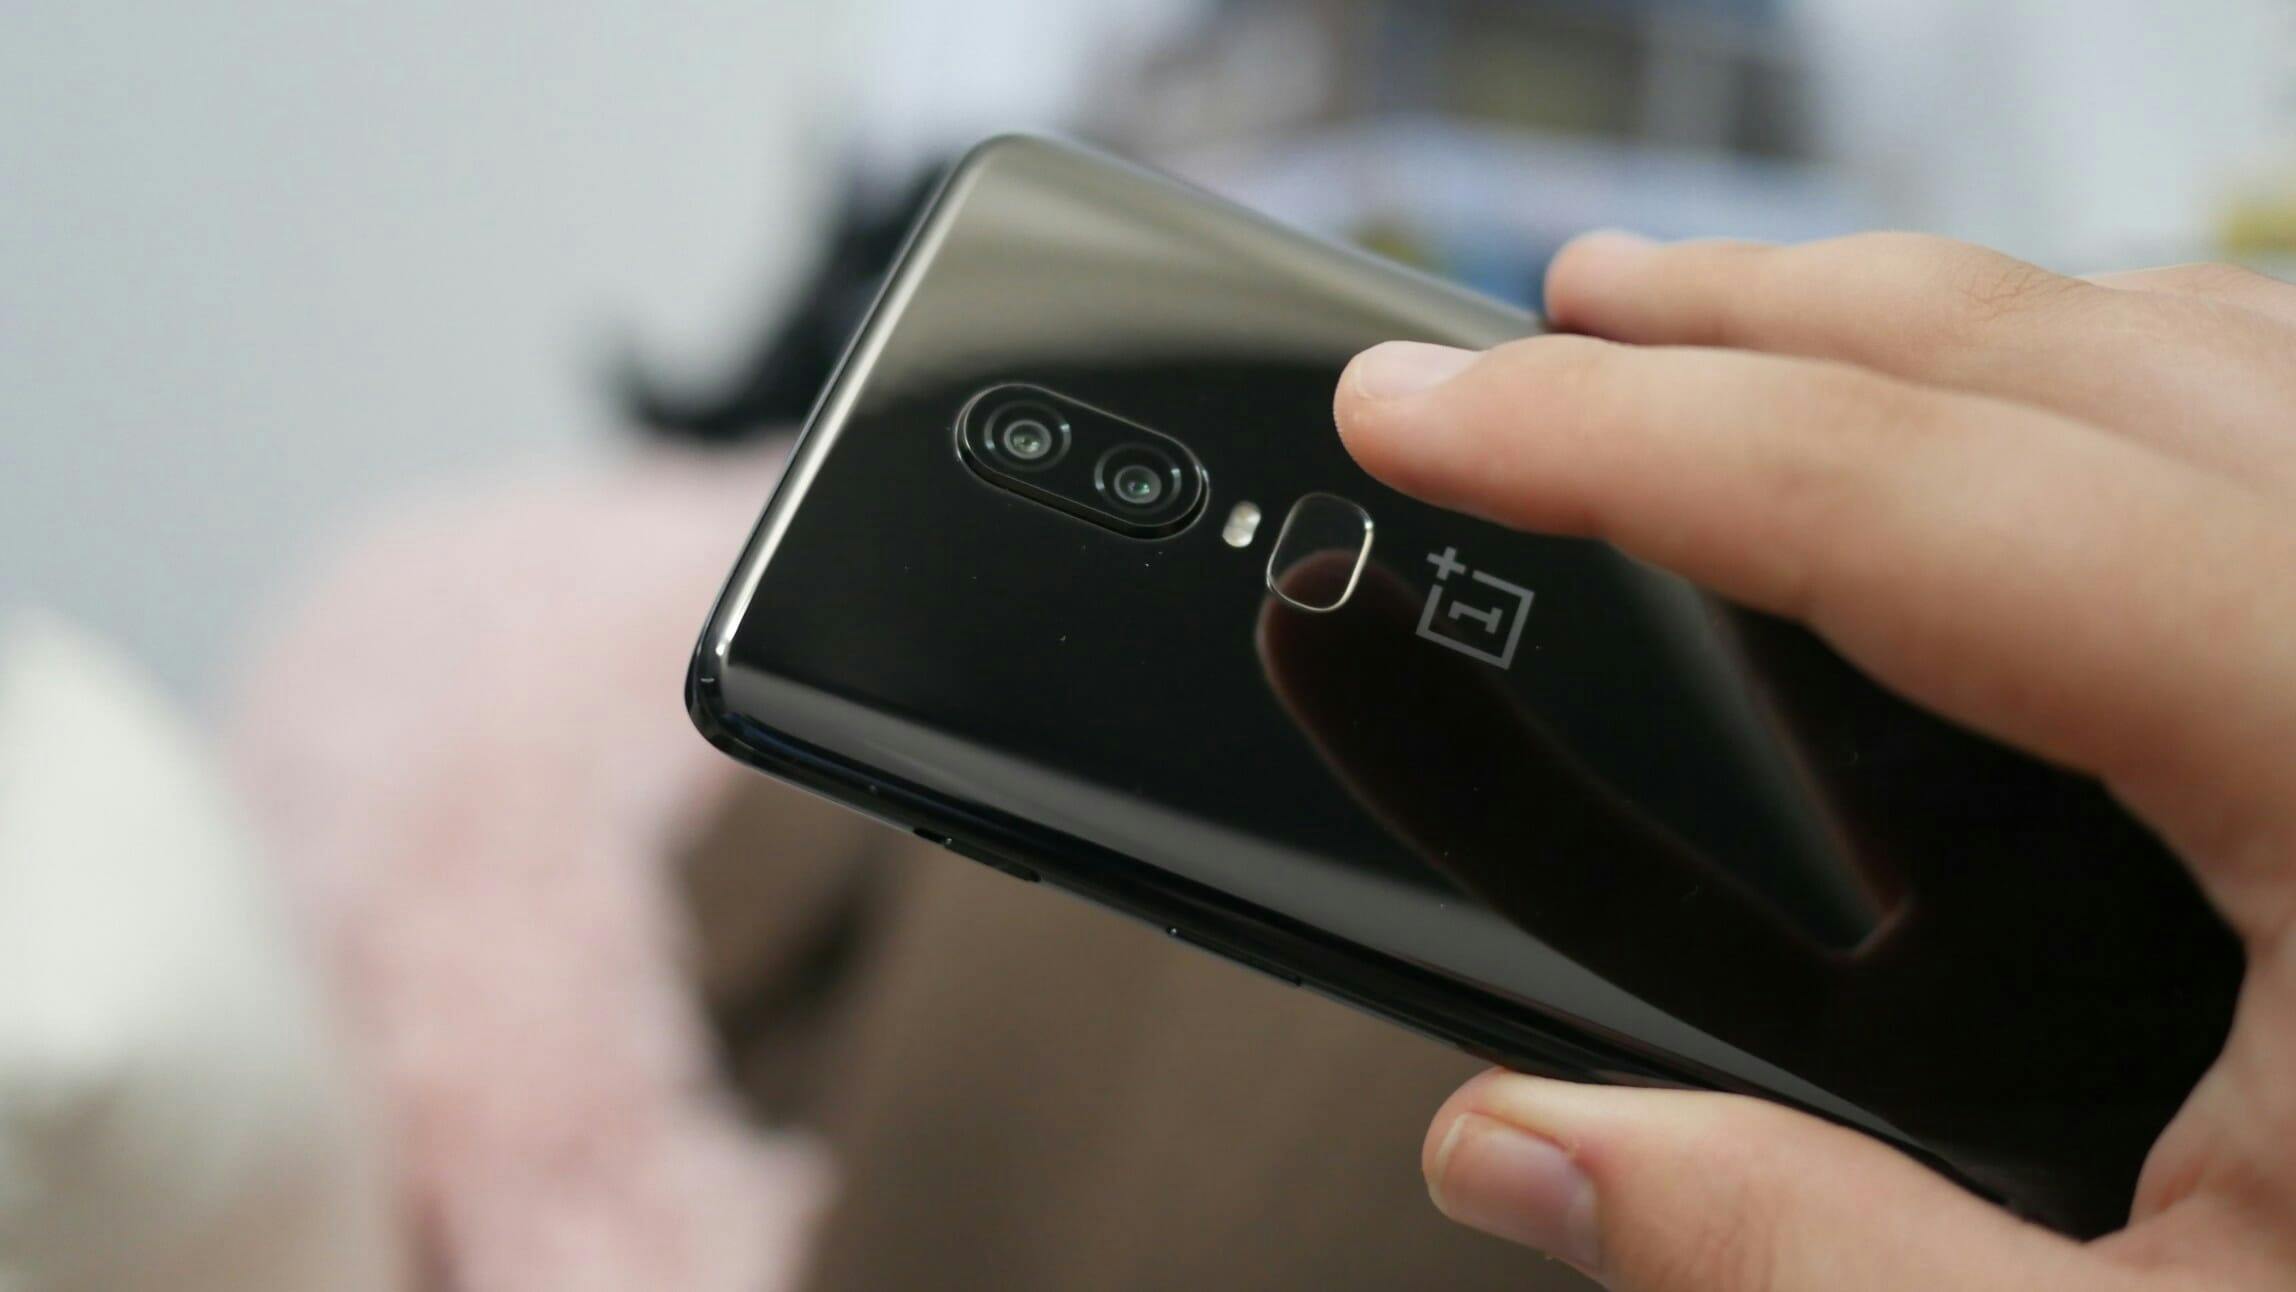 oneplus 6 smartphone design fingerprint sensor